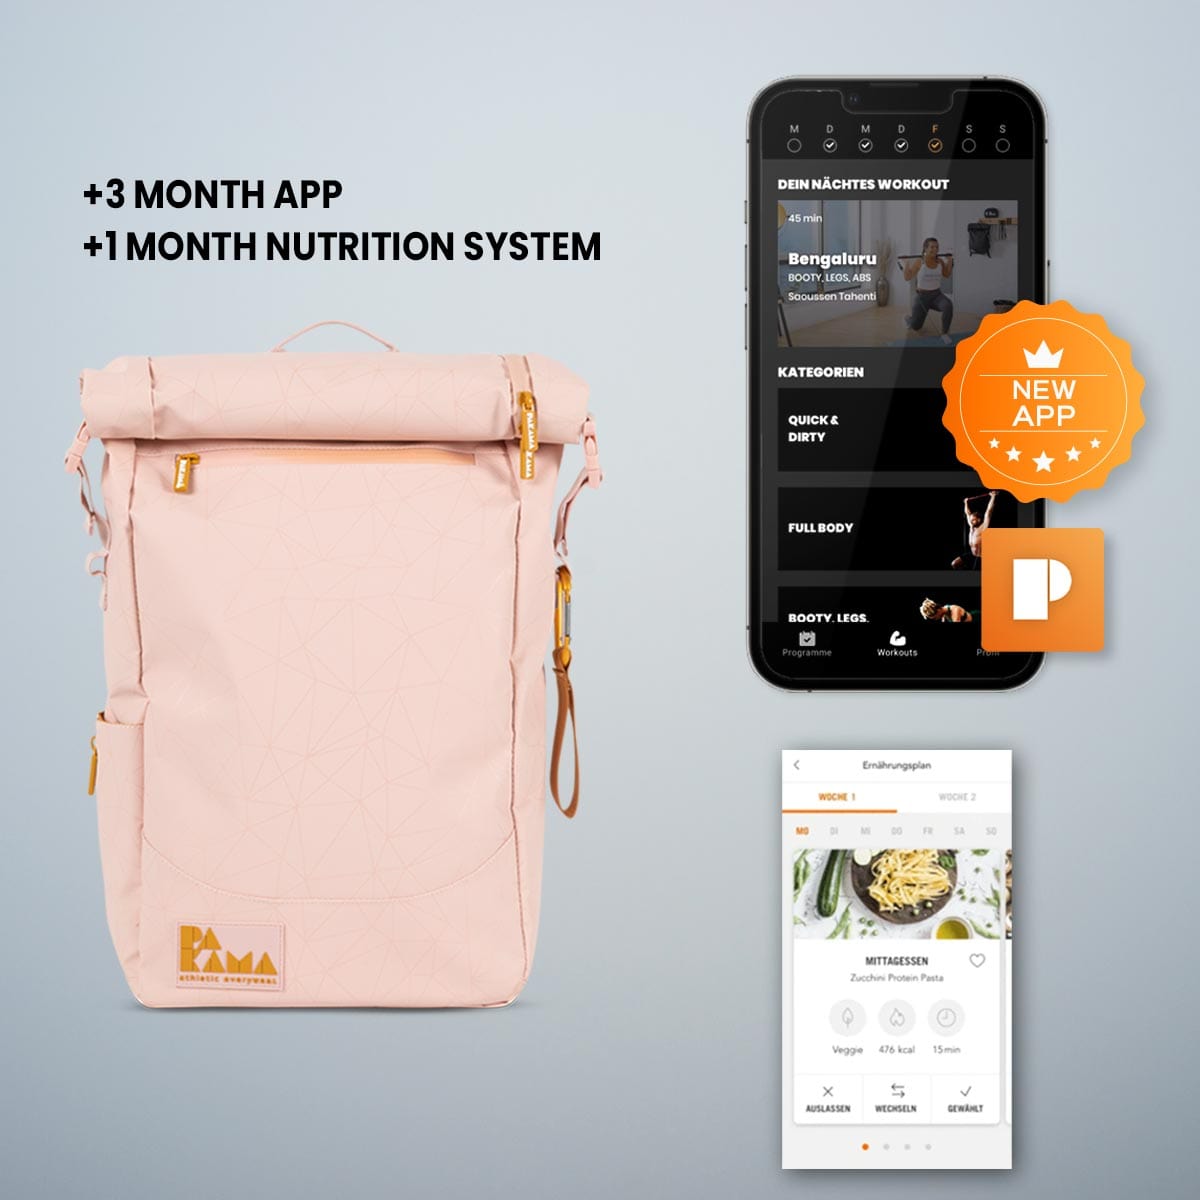 PAKAMA-fitnessrucksack-pink-app-nutrition system